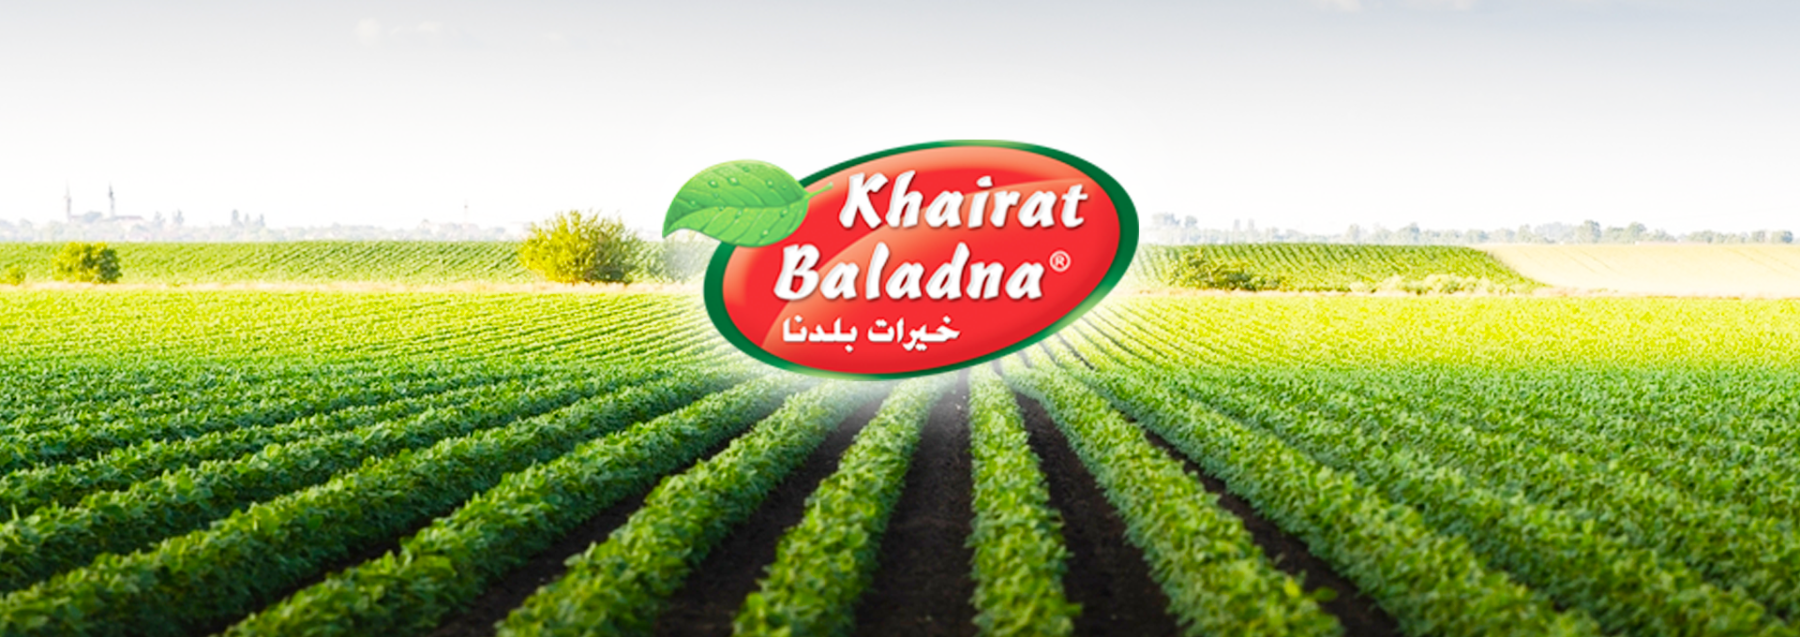 Khairat Baladna